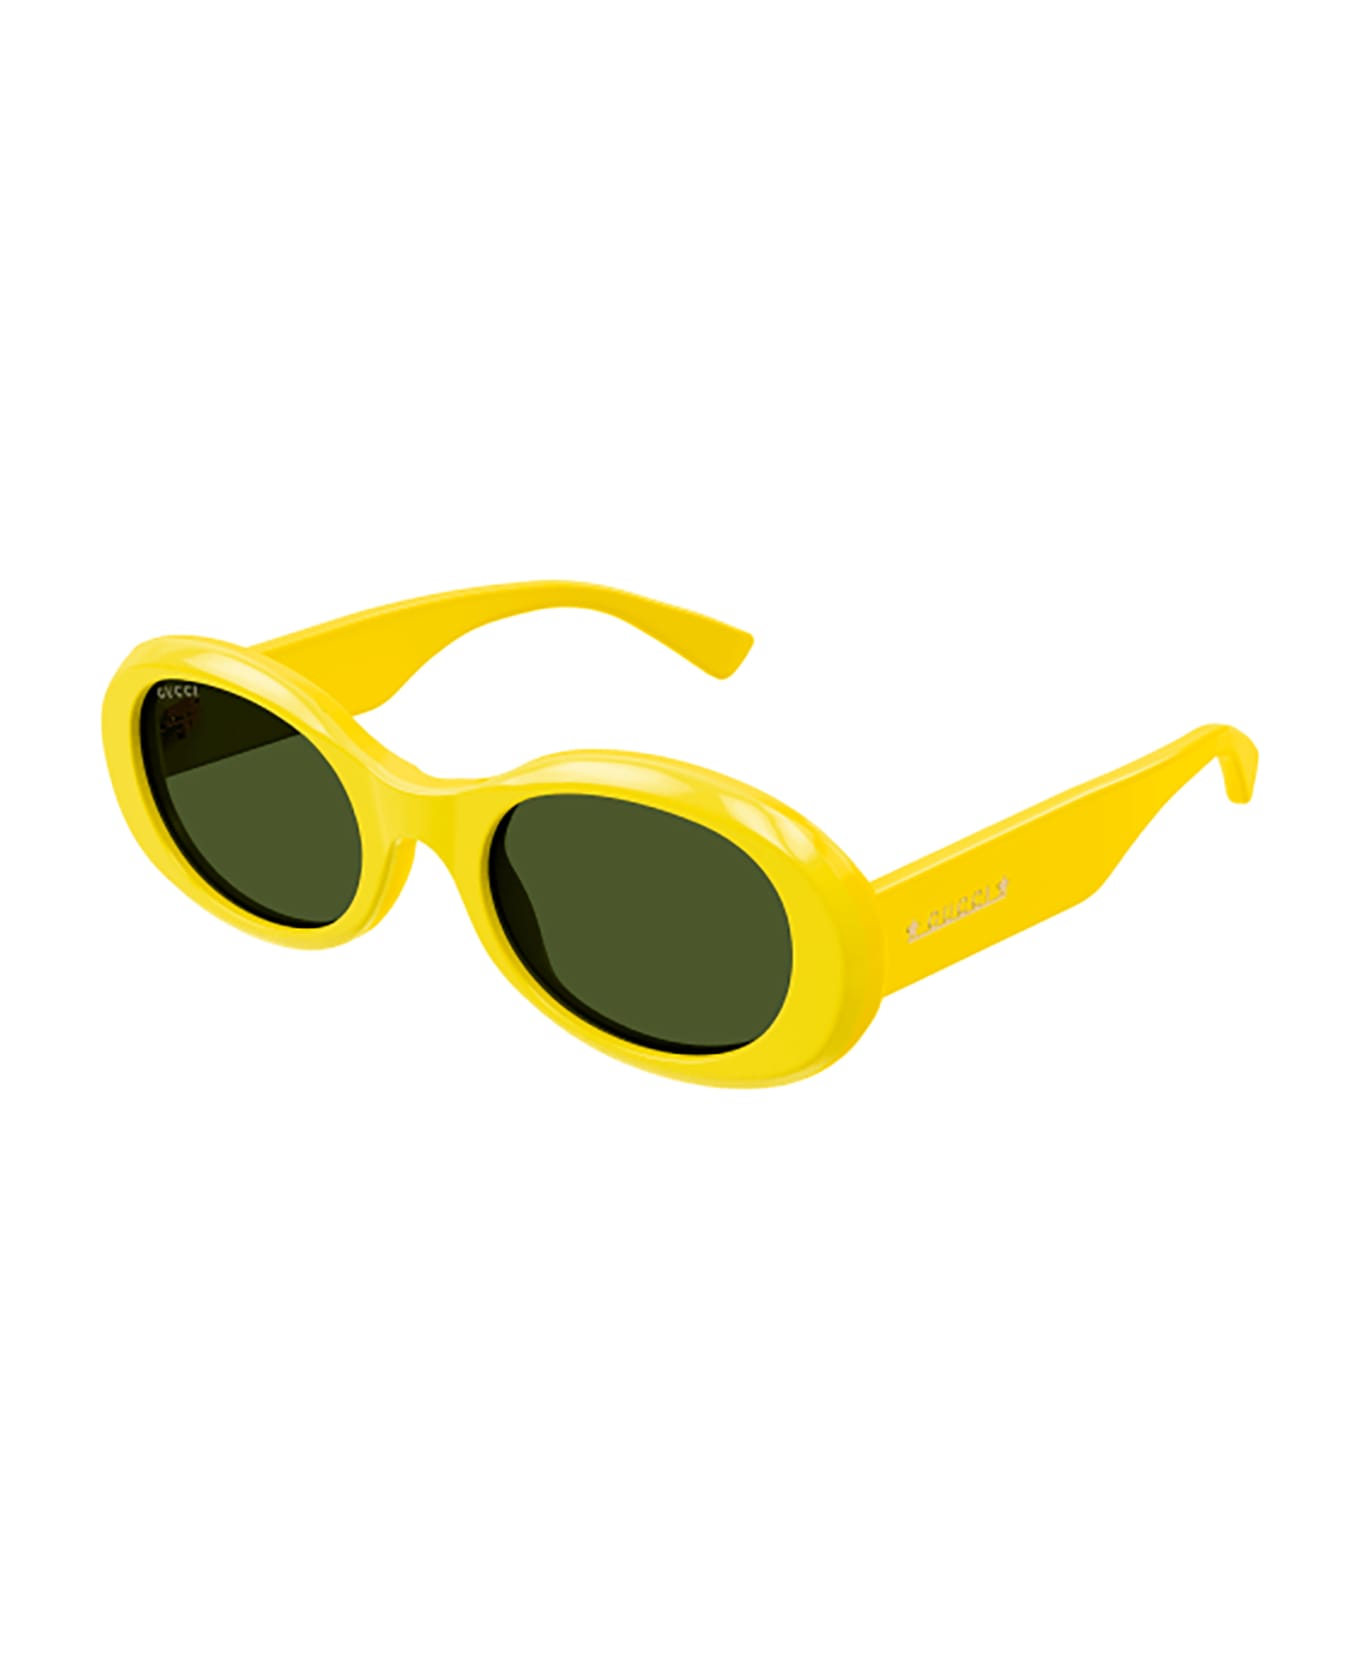 Gucci Eyewear GG1587S Sunglasses - Yellow Yellow Green サングラス